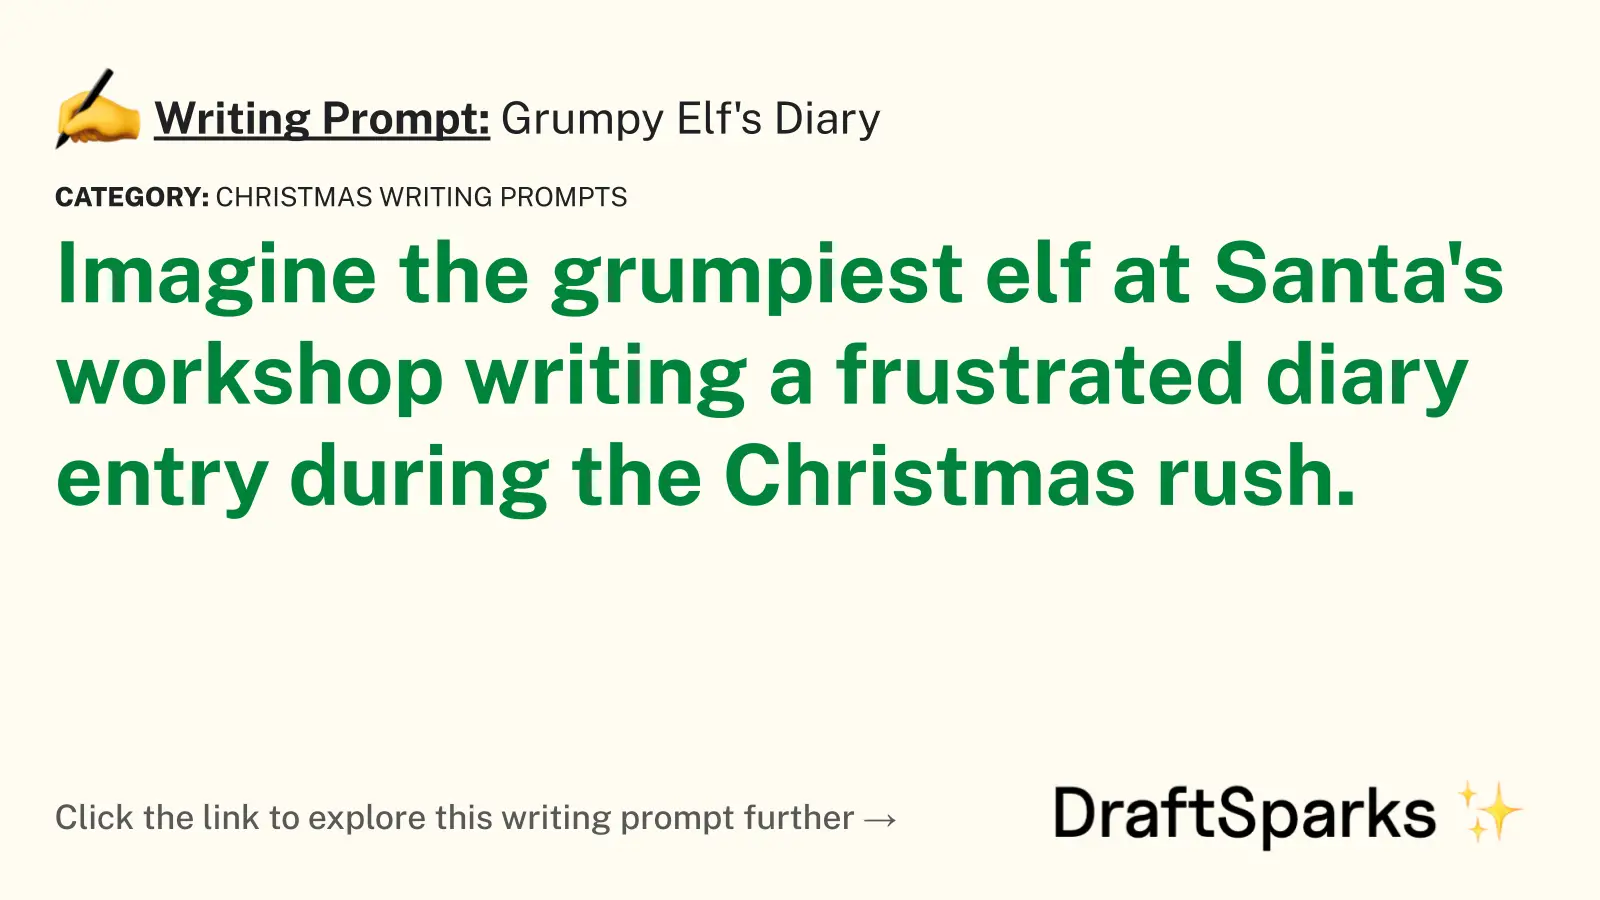 Grumpy Elf’s Diary